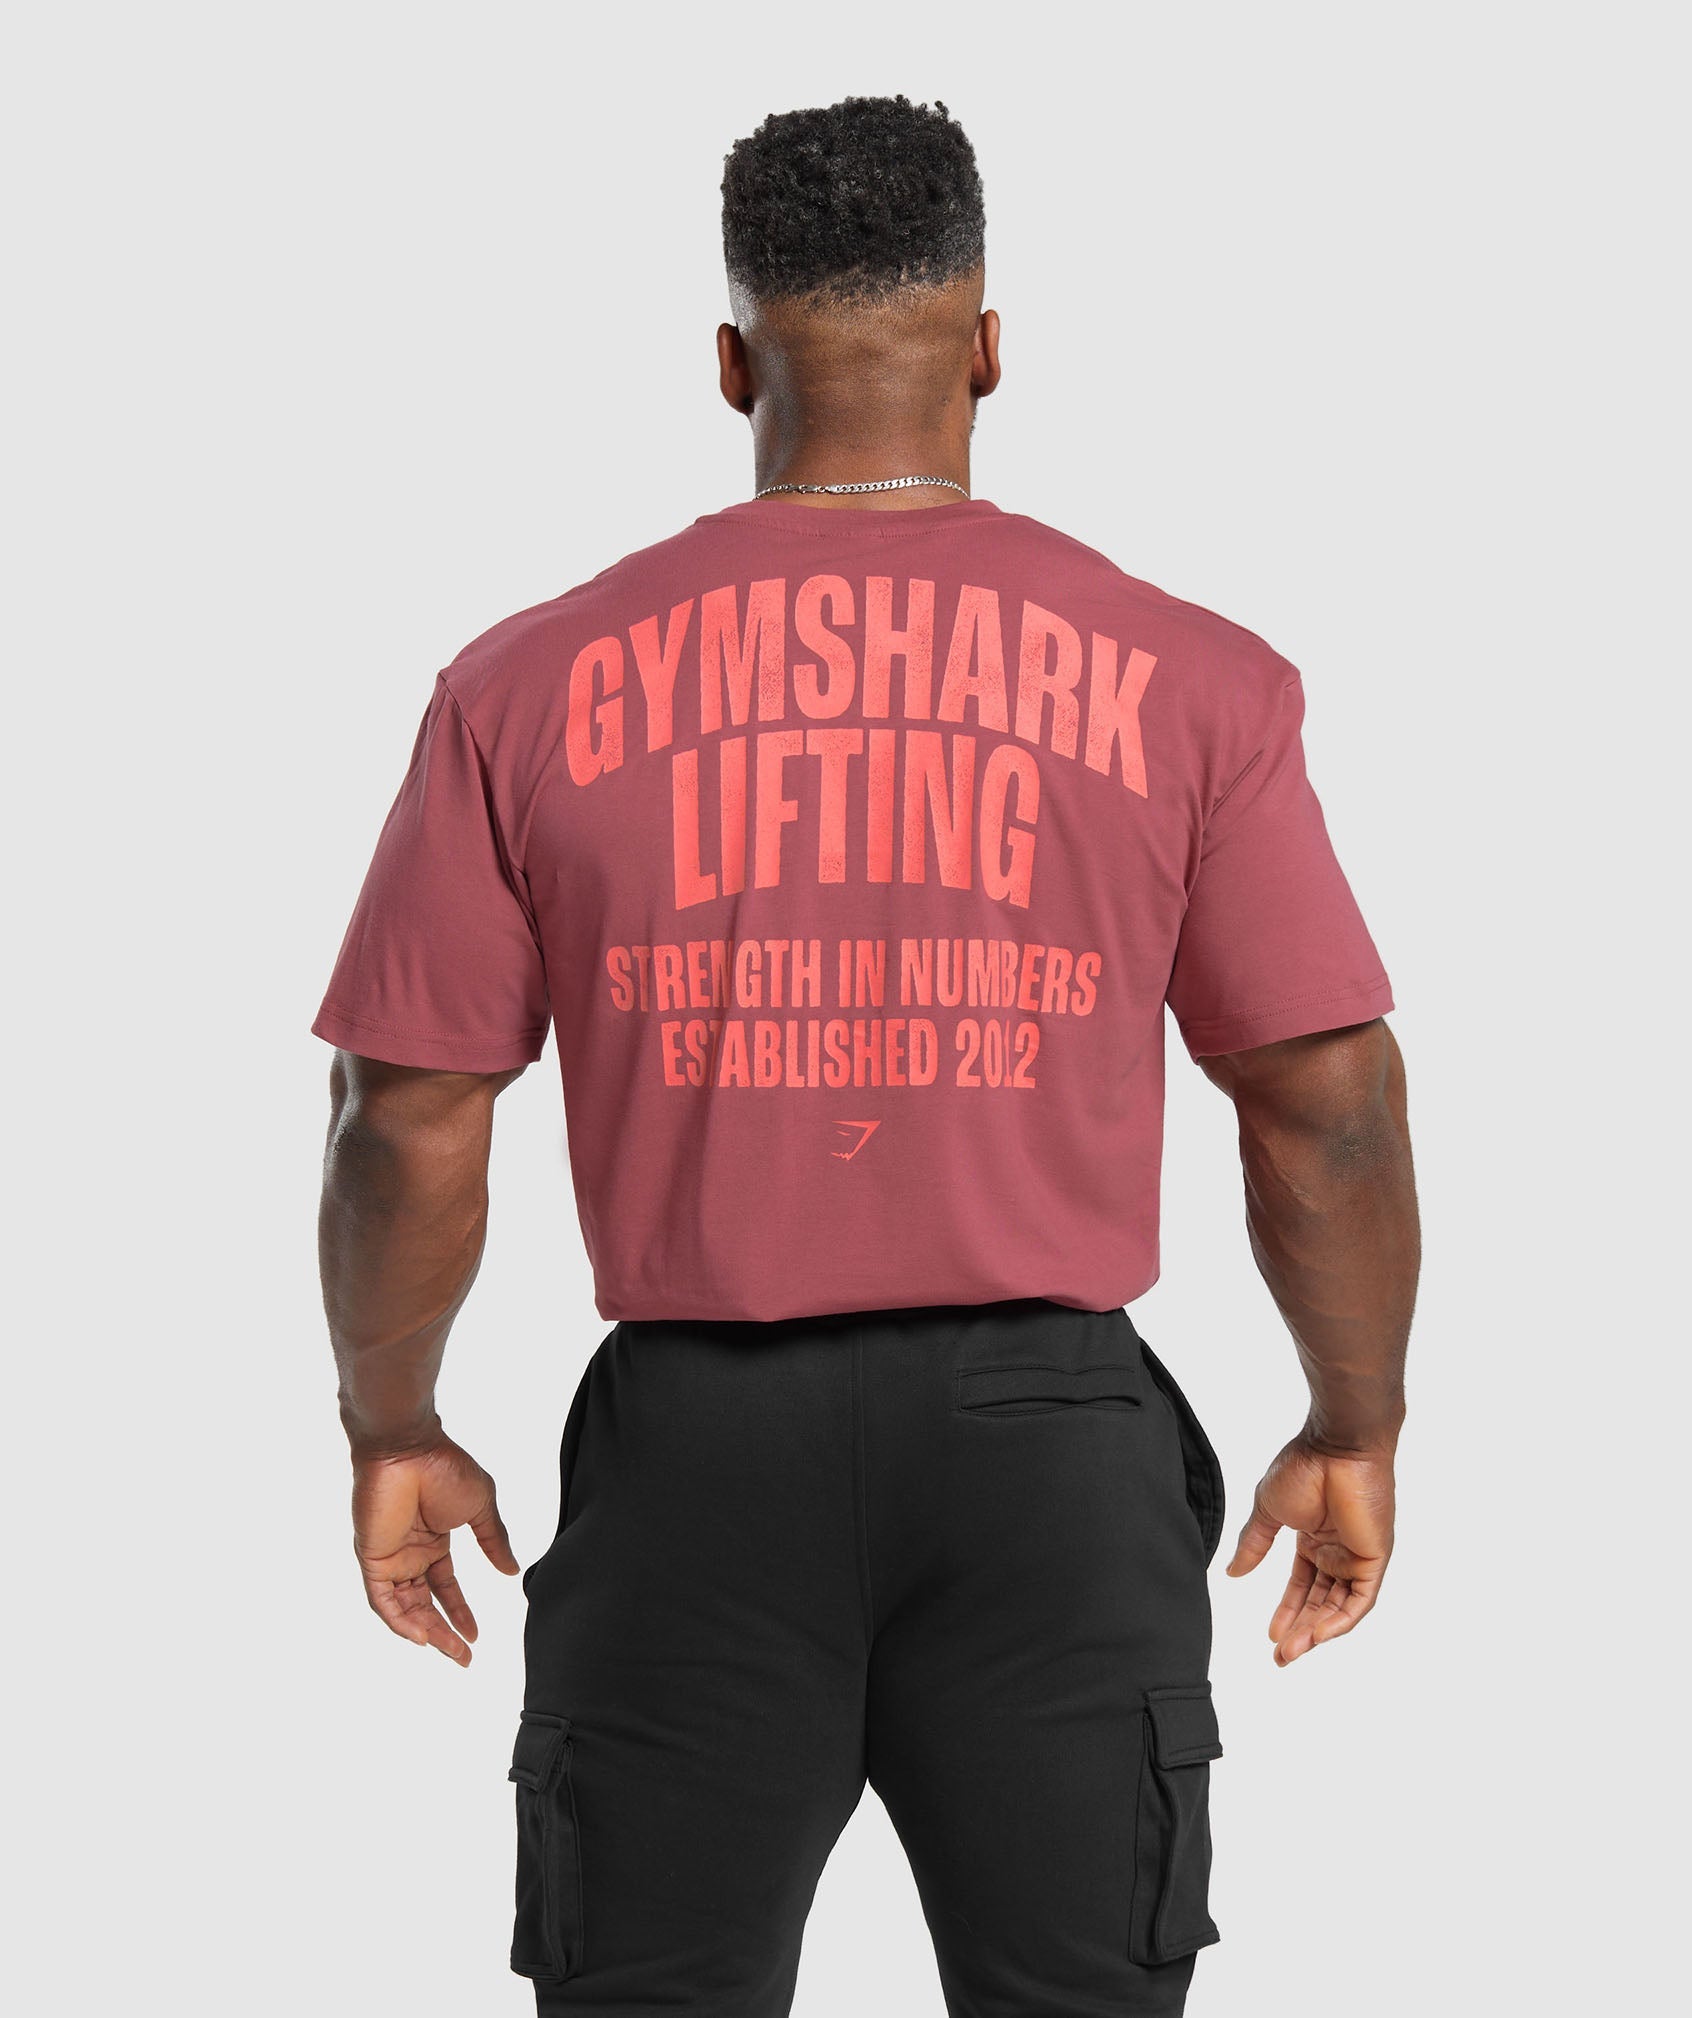 Gymshark Lifting T-Shirt - Soft Berry